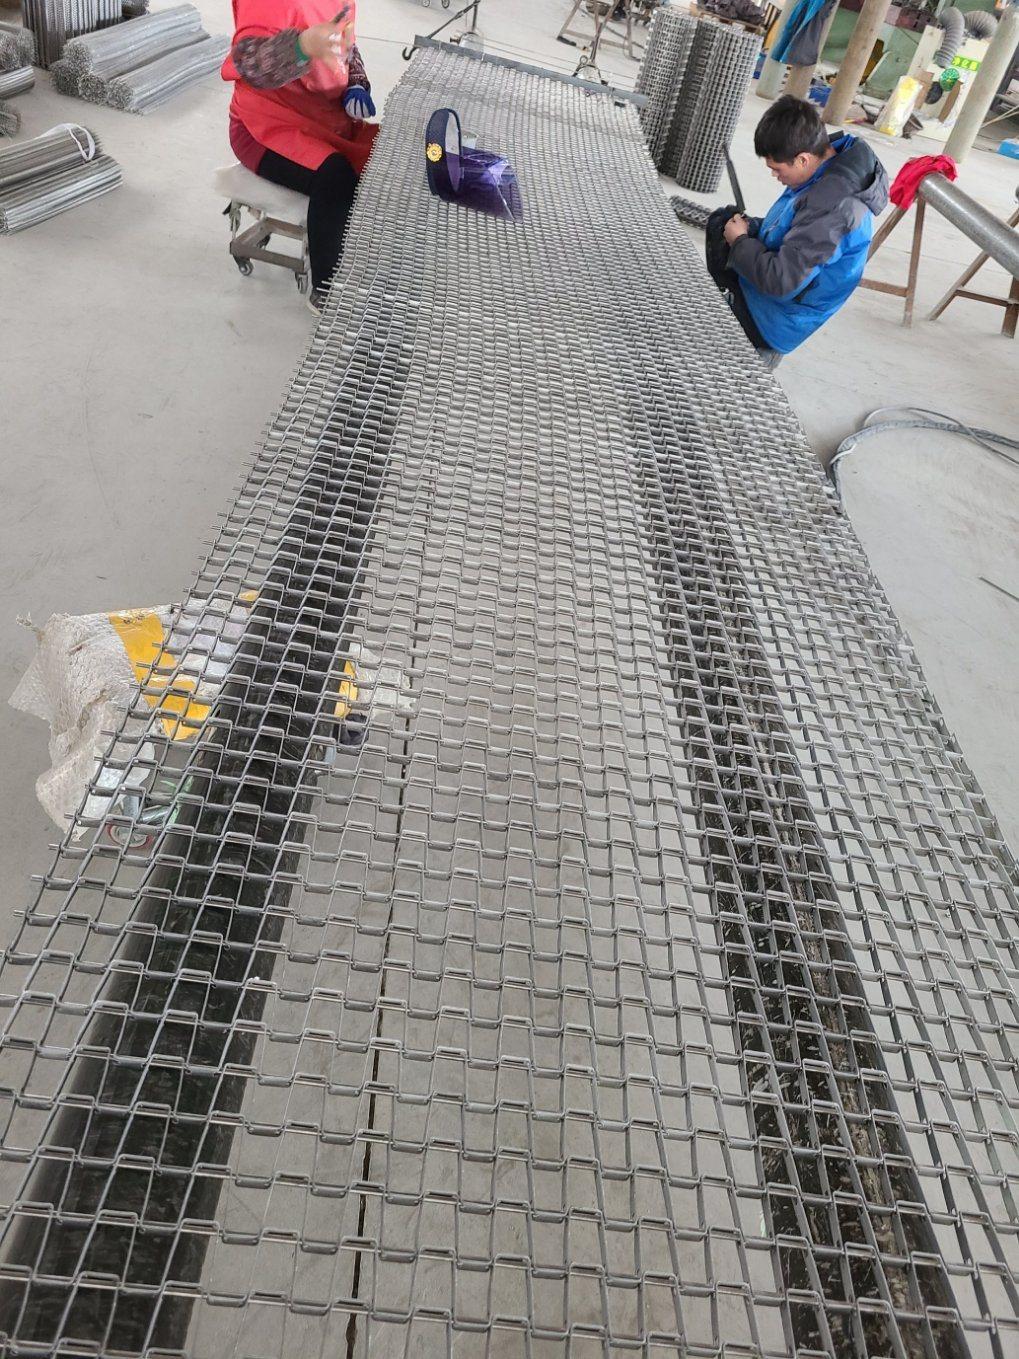 Annealing Furnace Mesh Belt for High Temperature Resistant Stainless Steel Conveyor Belt